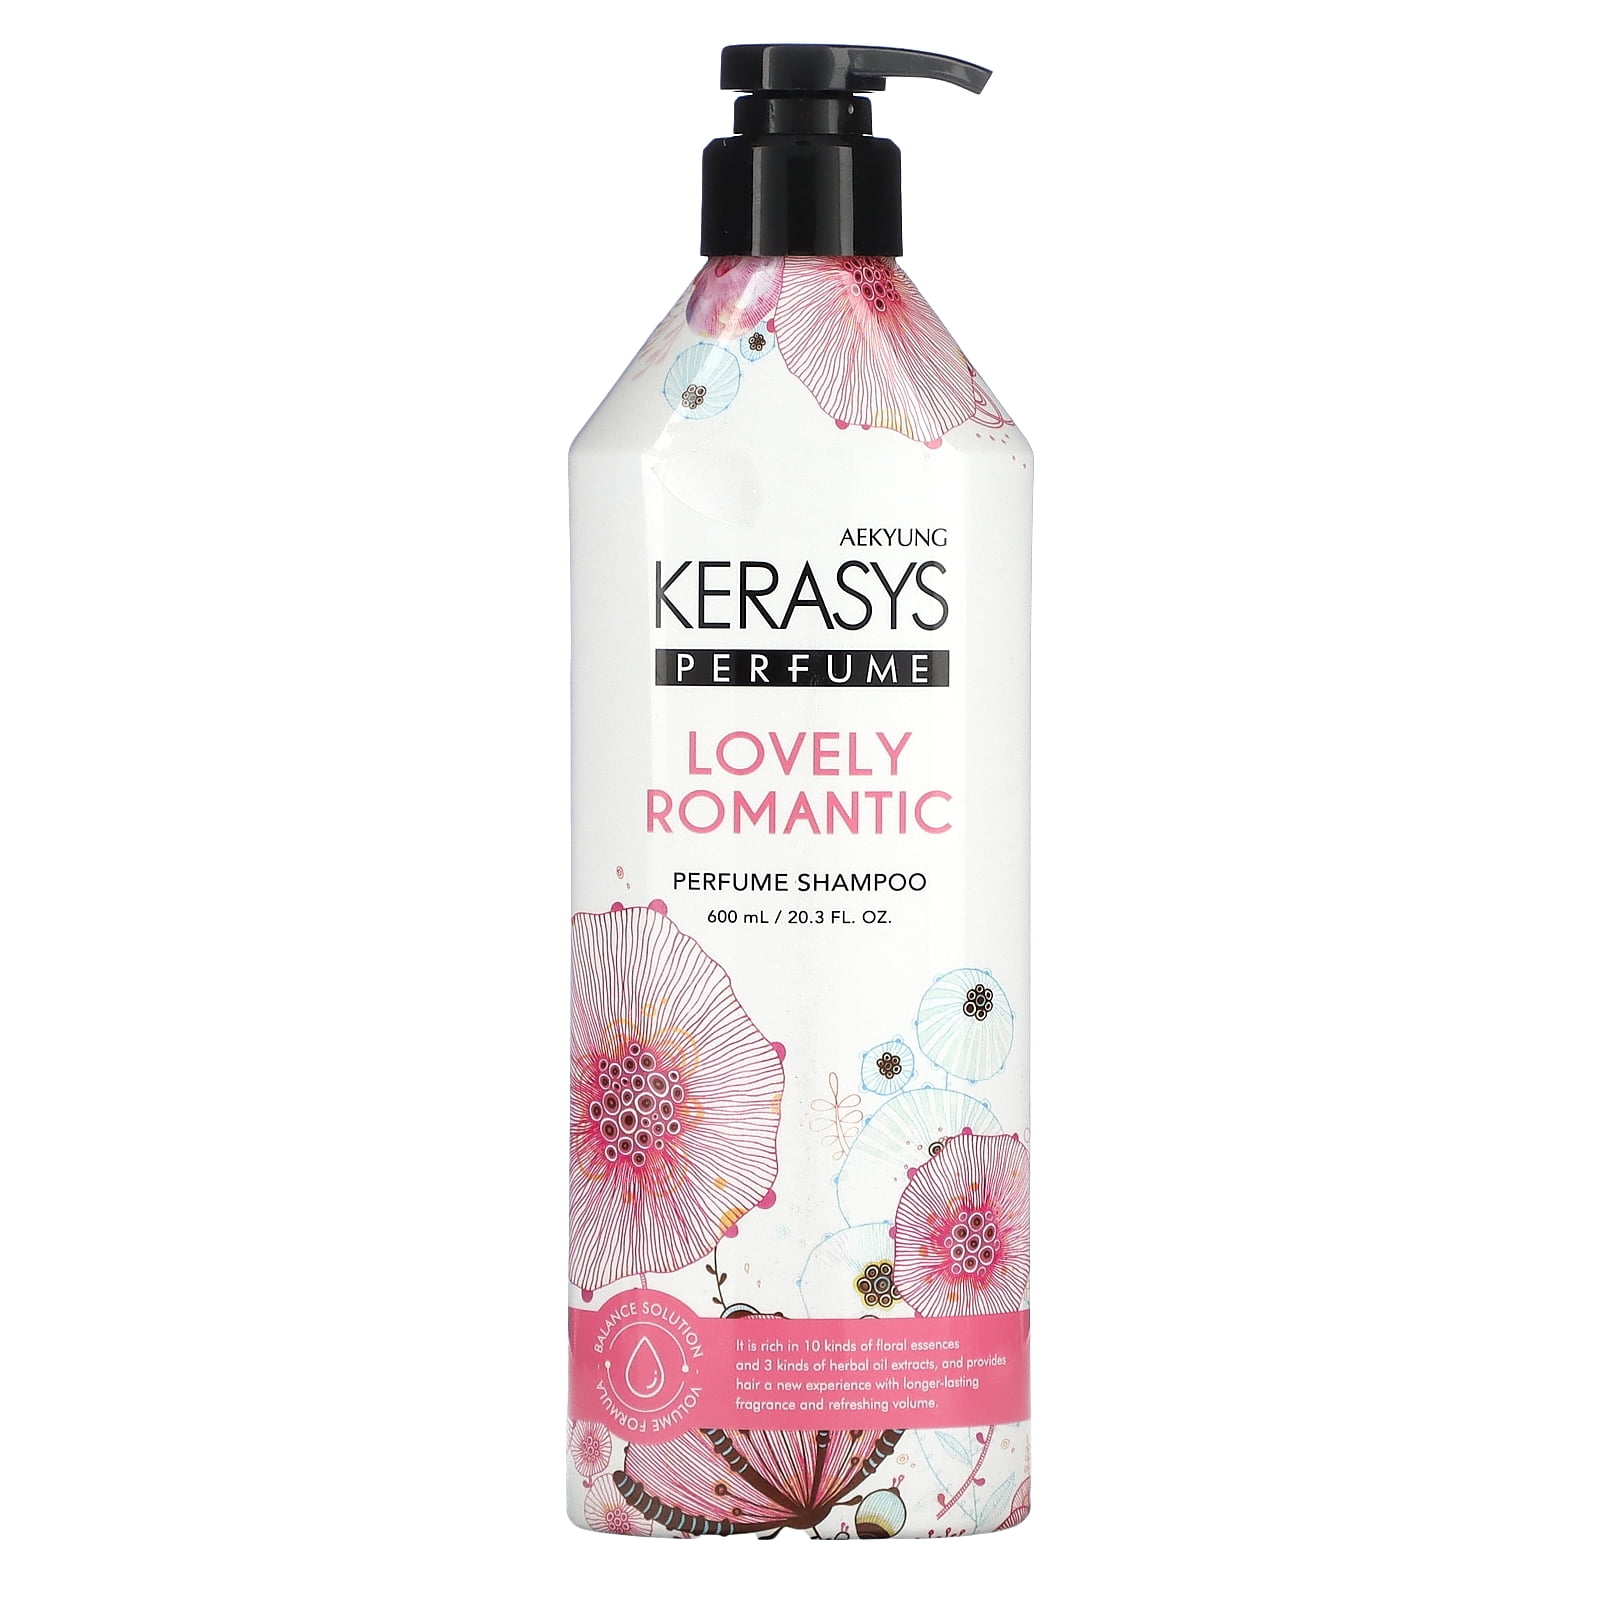 Lovely Romantic Perfume Shampoo, 20.3 (600 ml), Kerasys - Walmart.com